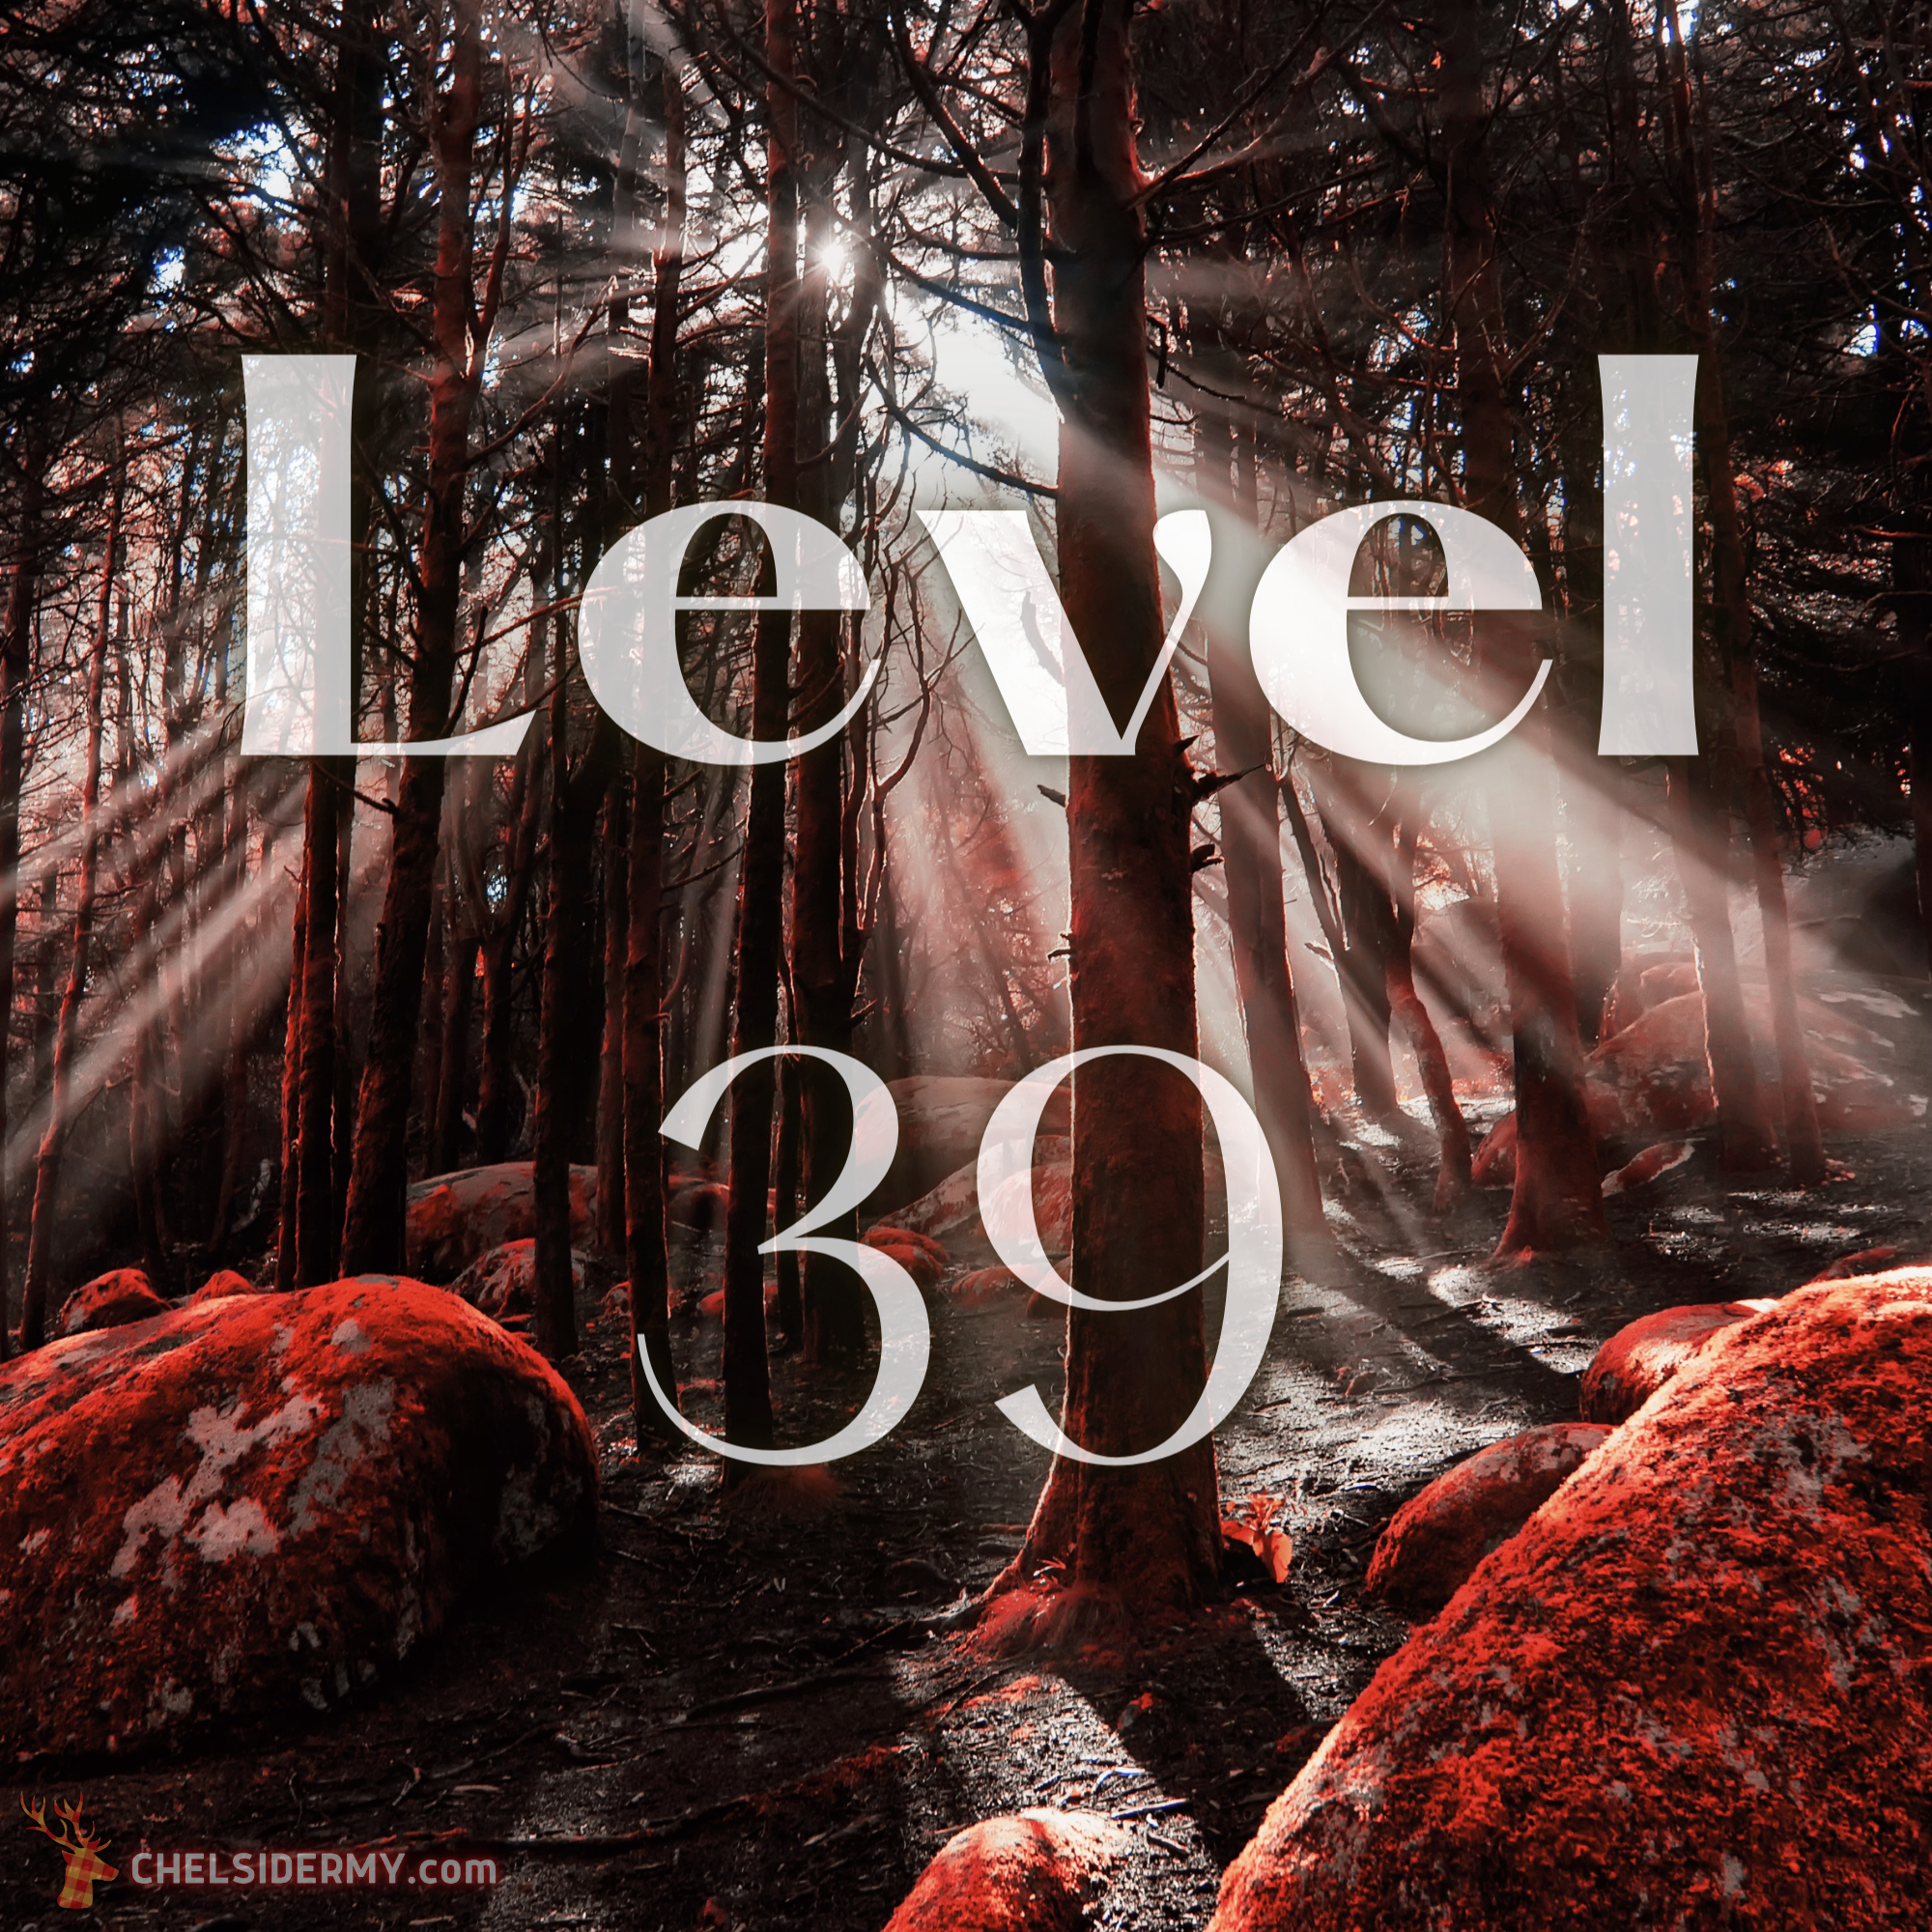 Level 39 enchanted forest #level39backroom #backroom #backroomtok #ba